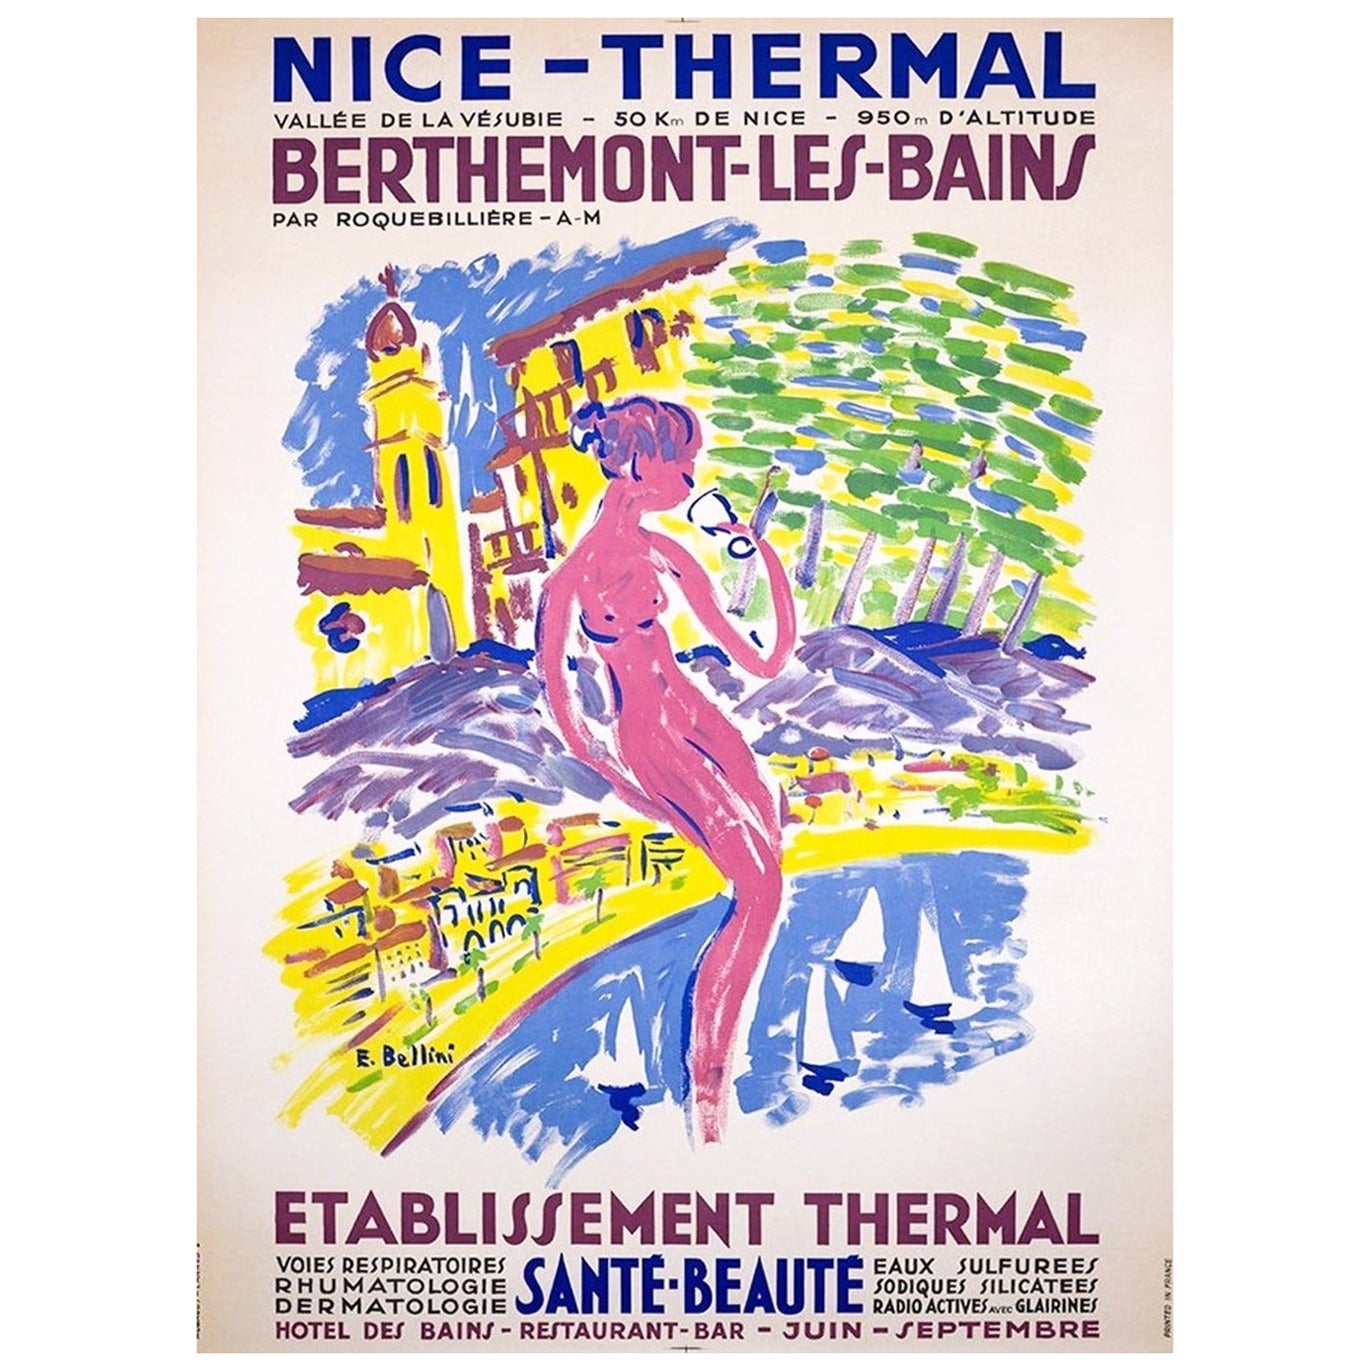 1960 Nice - Thermal Berthemont-les-bains Original Vintage Poster